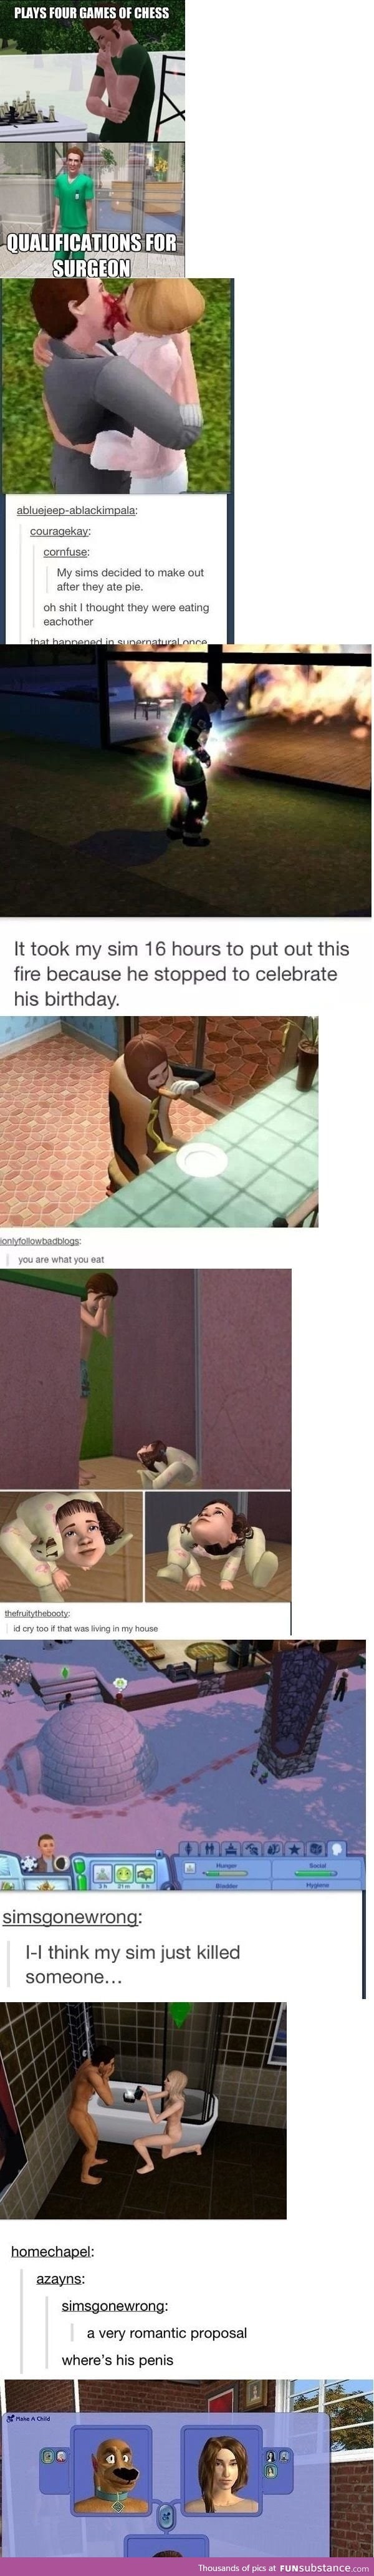 Sims 3 logic